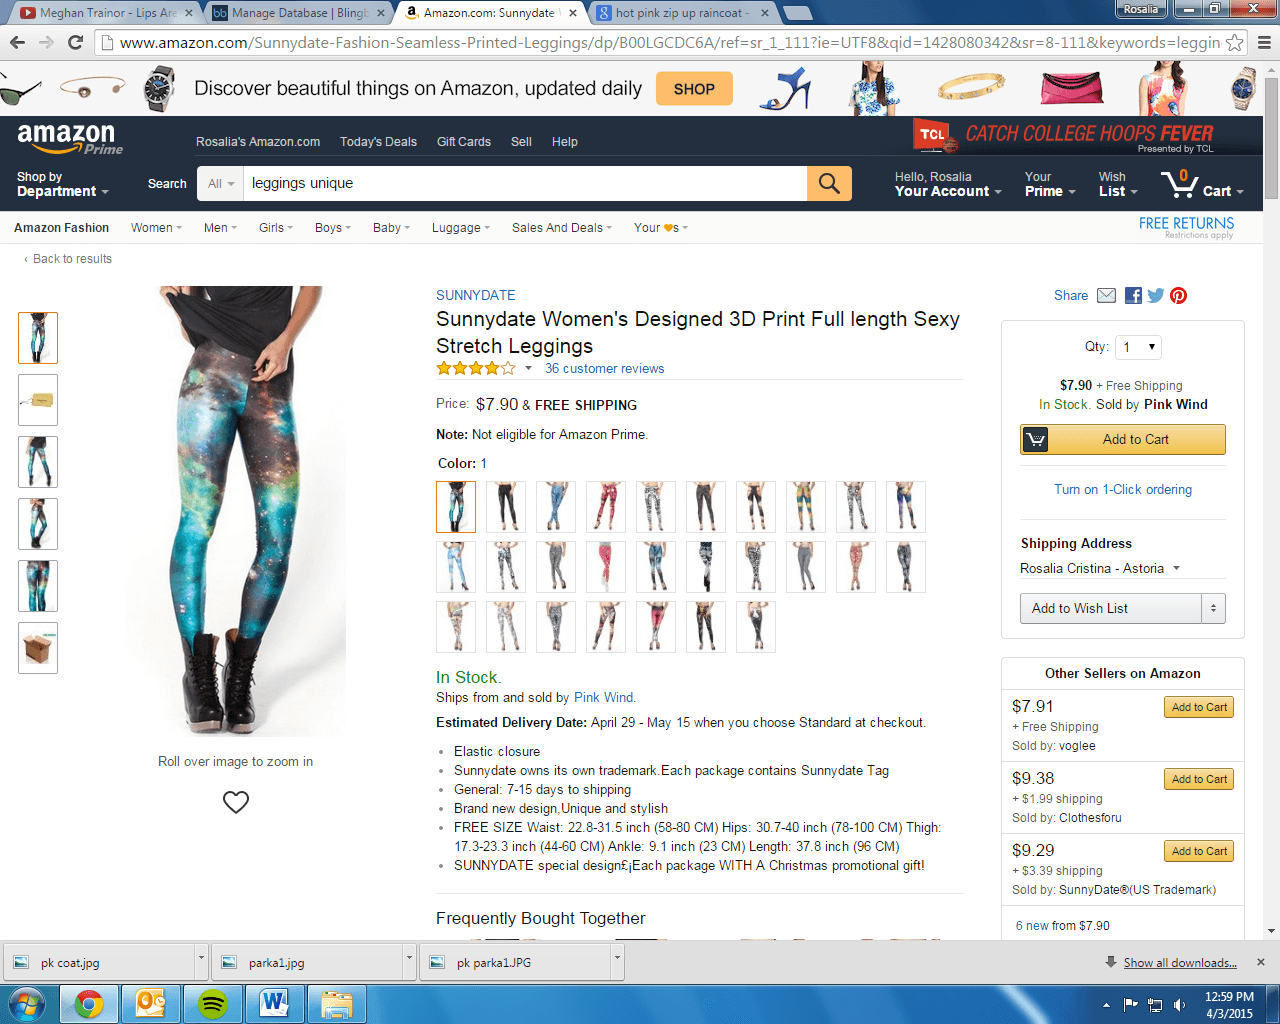 Sunnydate Women's Designed 3D Print Full length Sexy Stretch Leggings